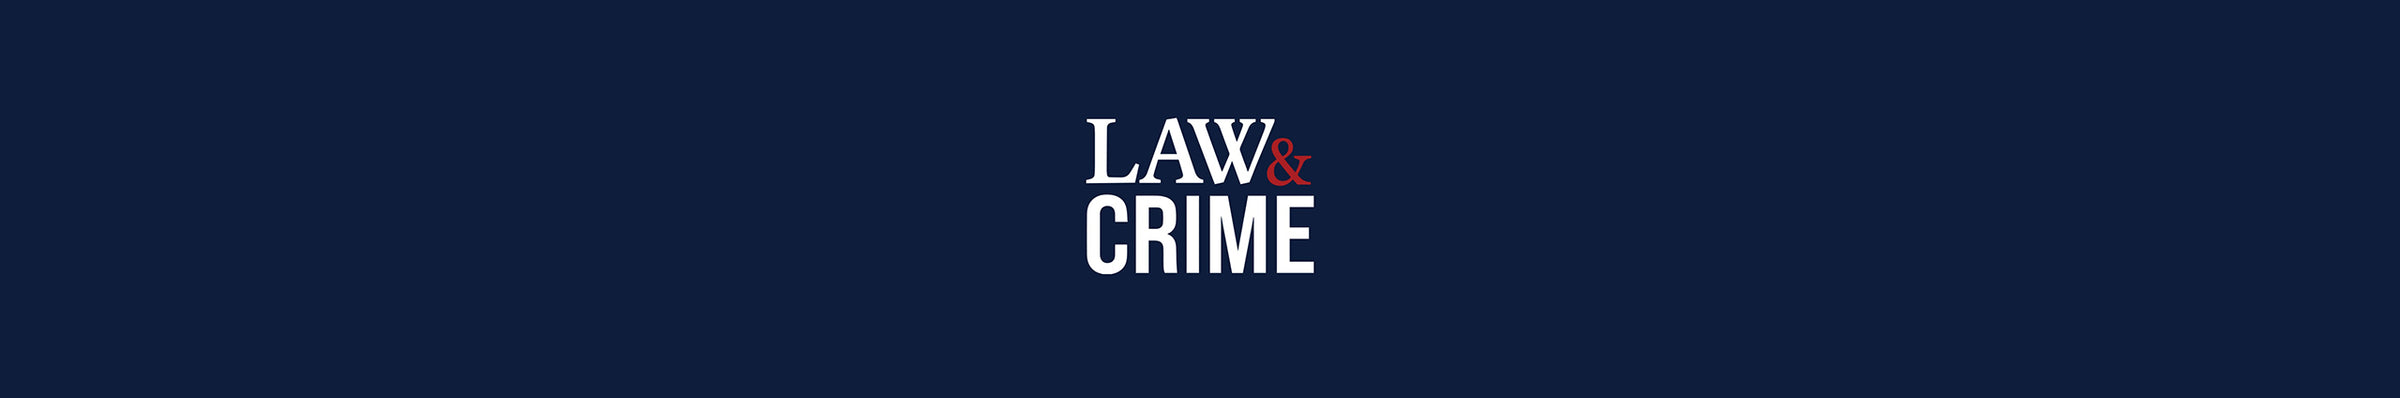 Welcome, Law & Crime fan!